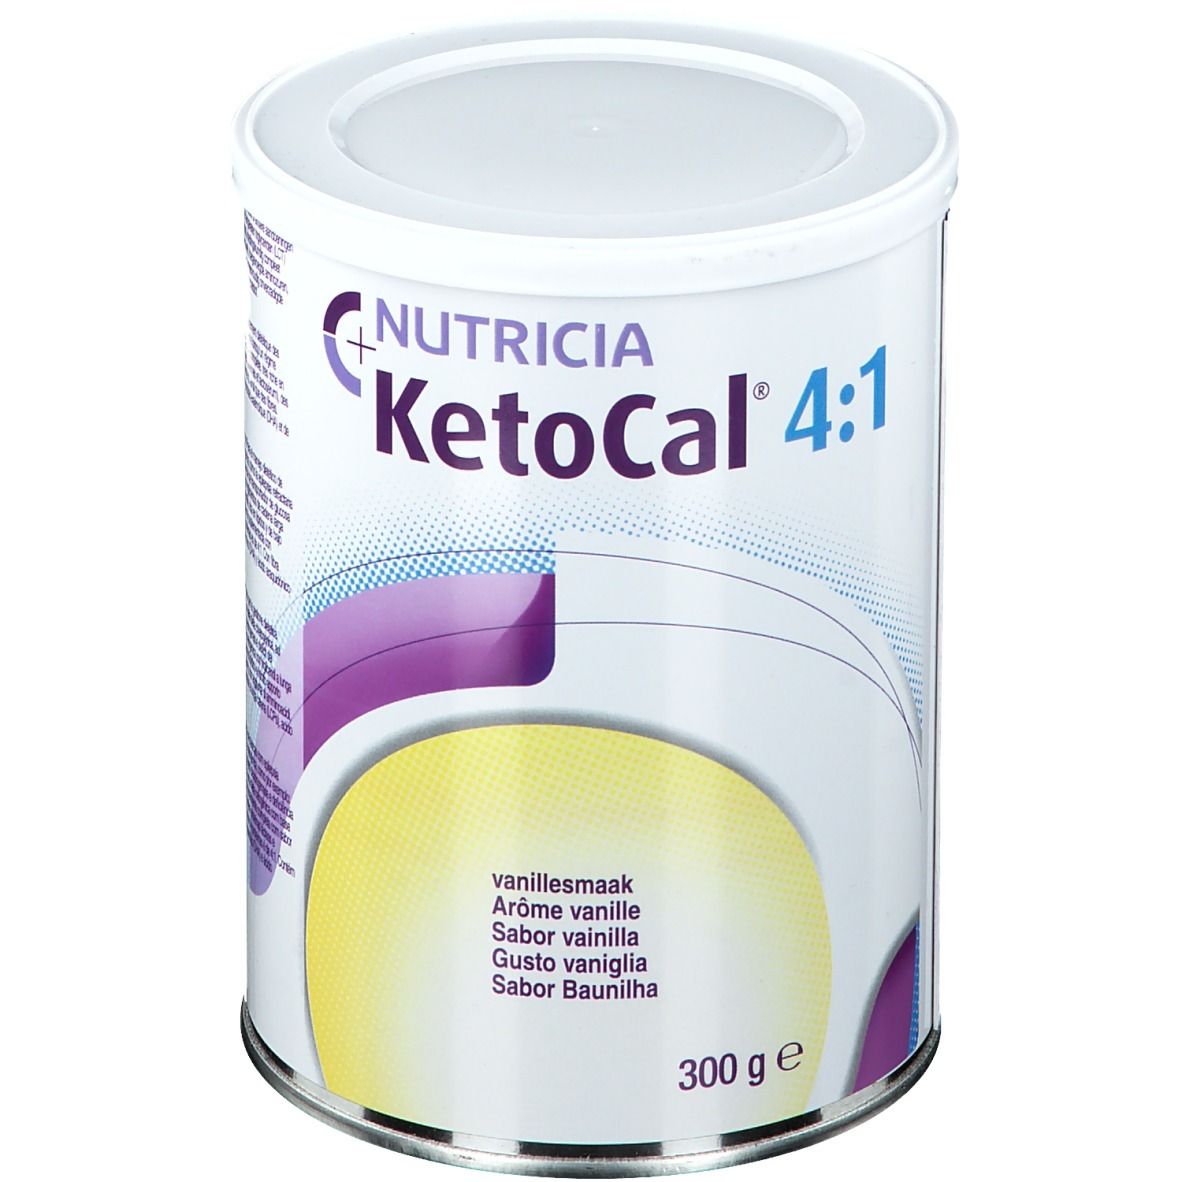 Nutricia Ketocal® 4:1 Arôme vanille